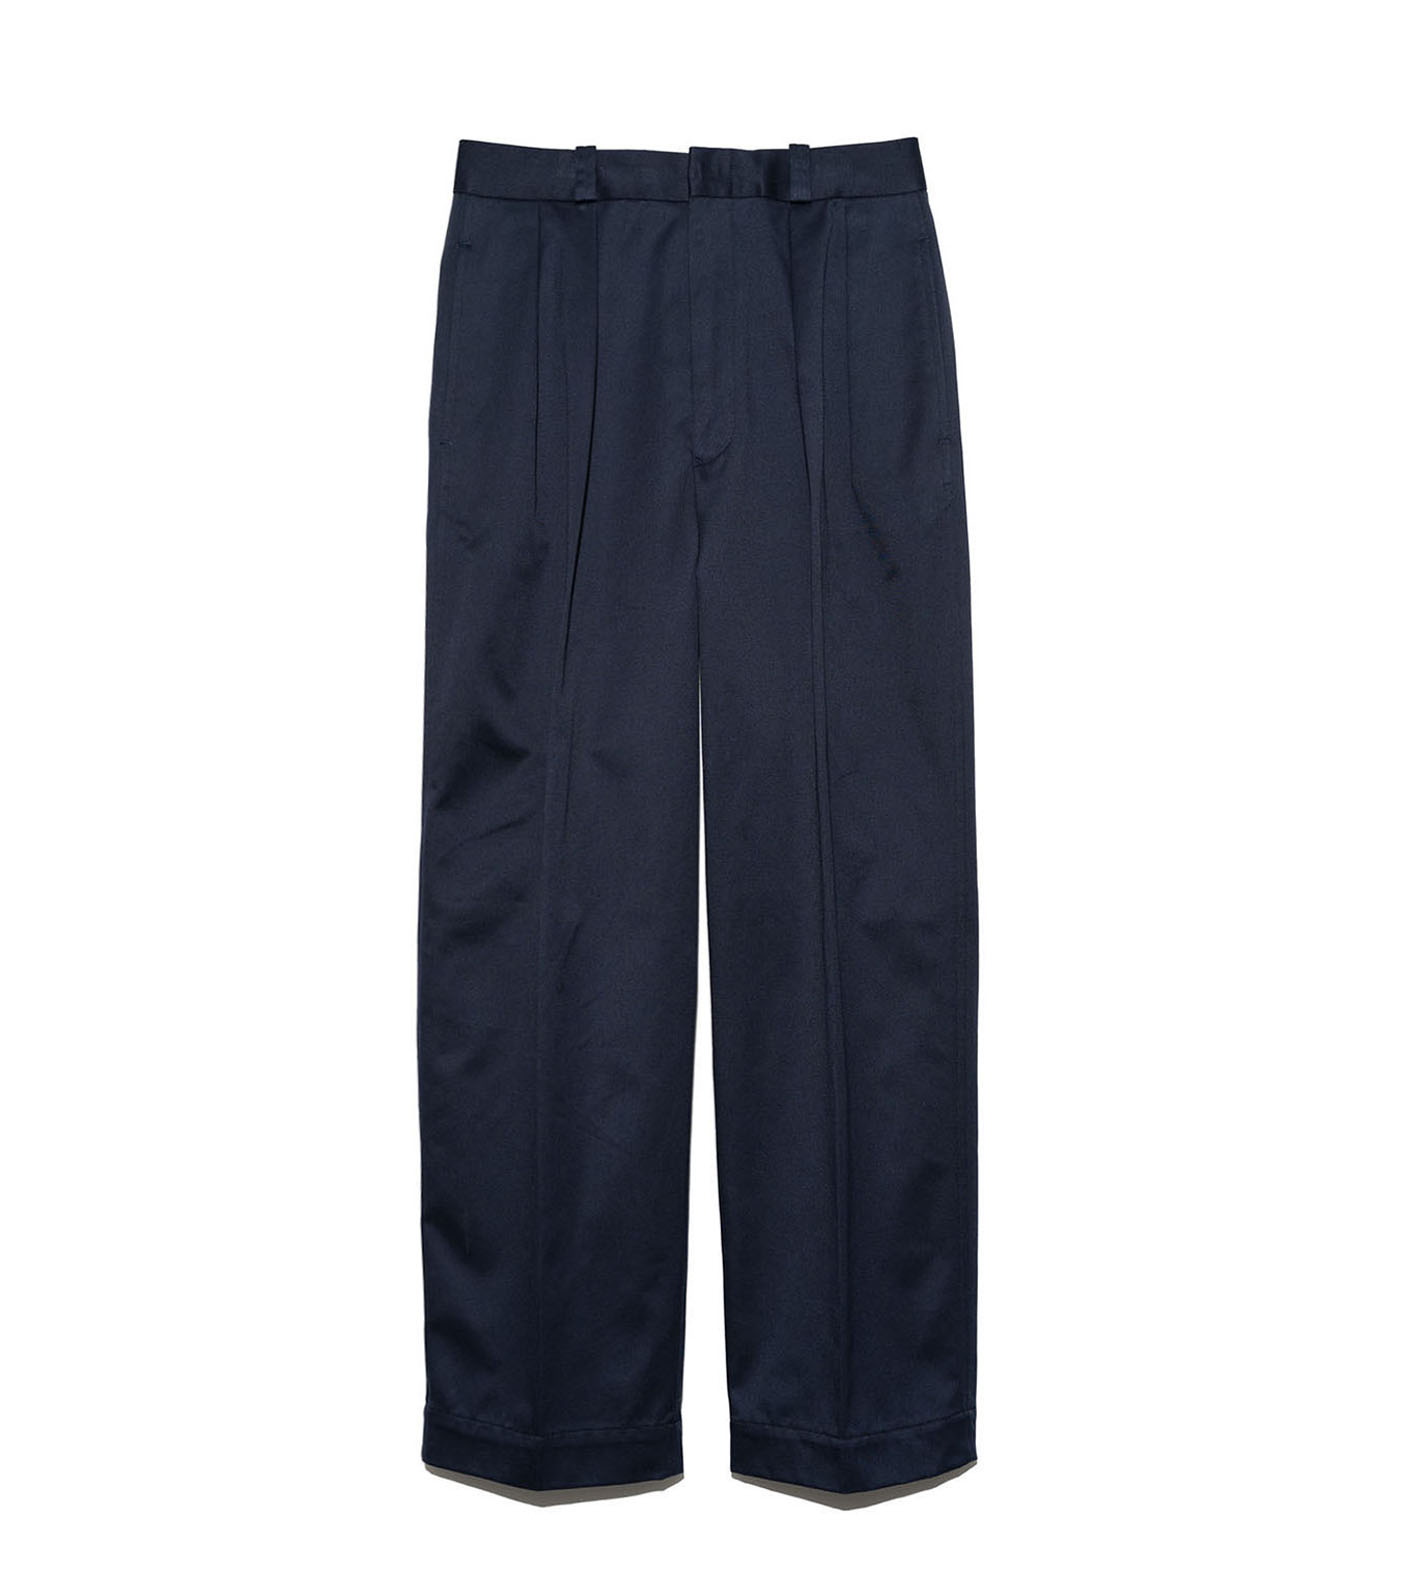 nanamica / Double Pleat Chino Pants